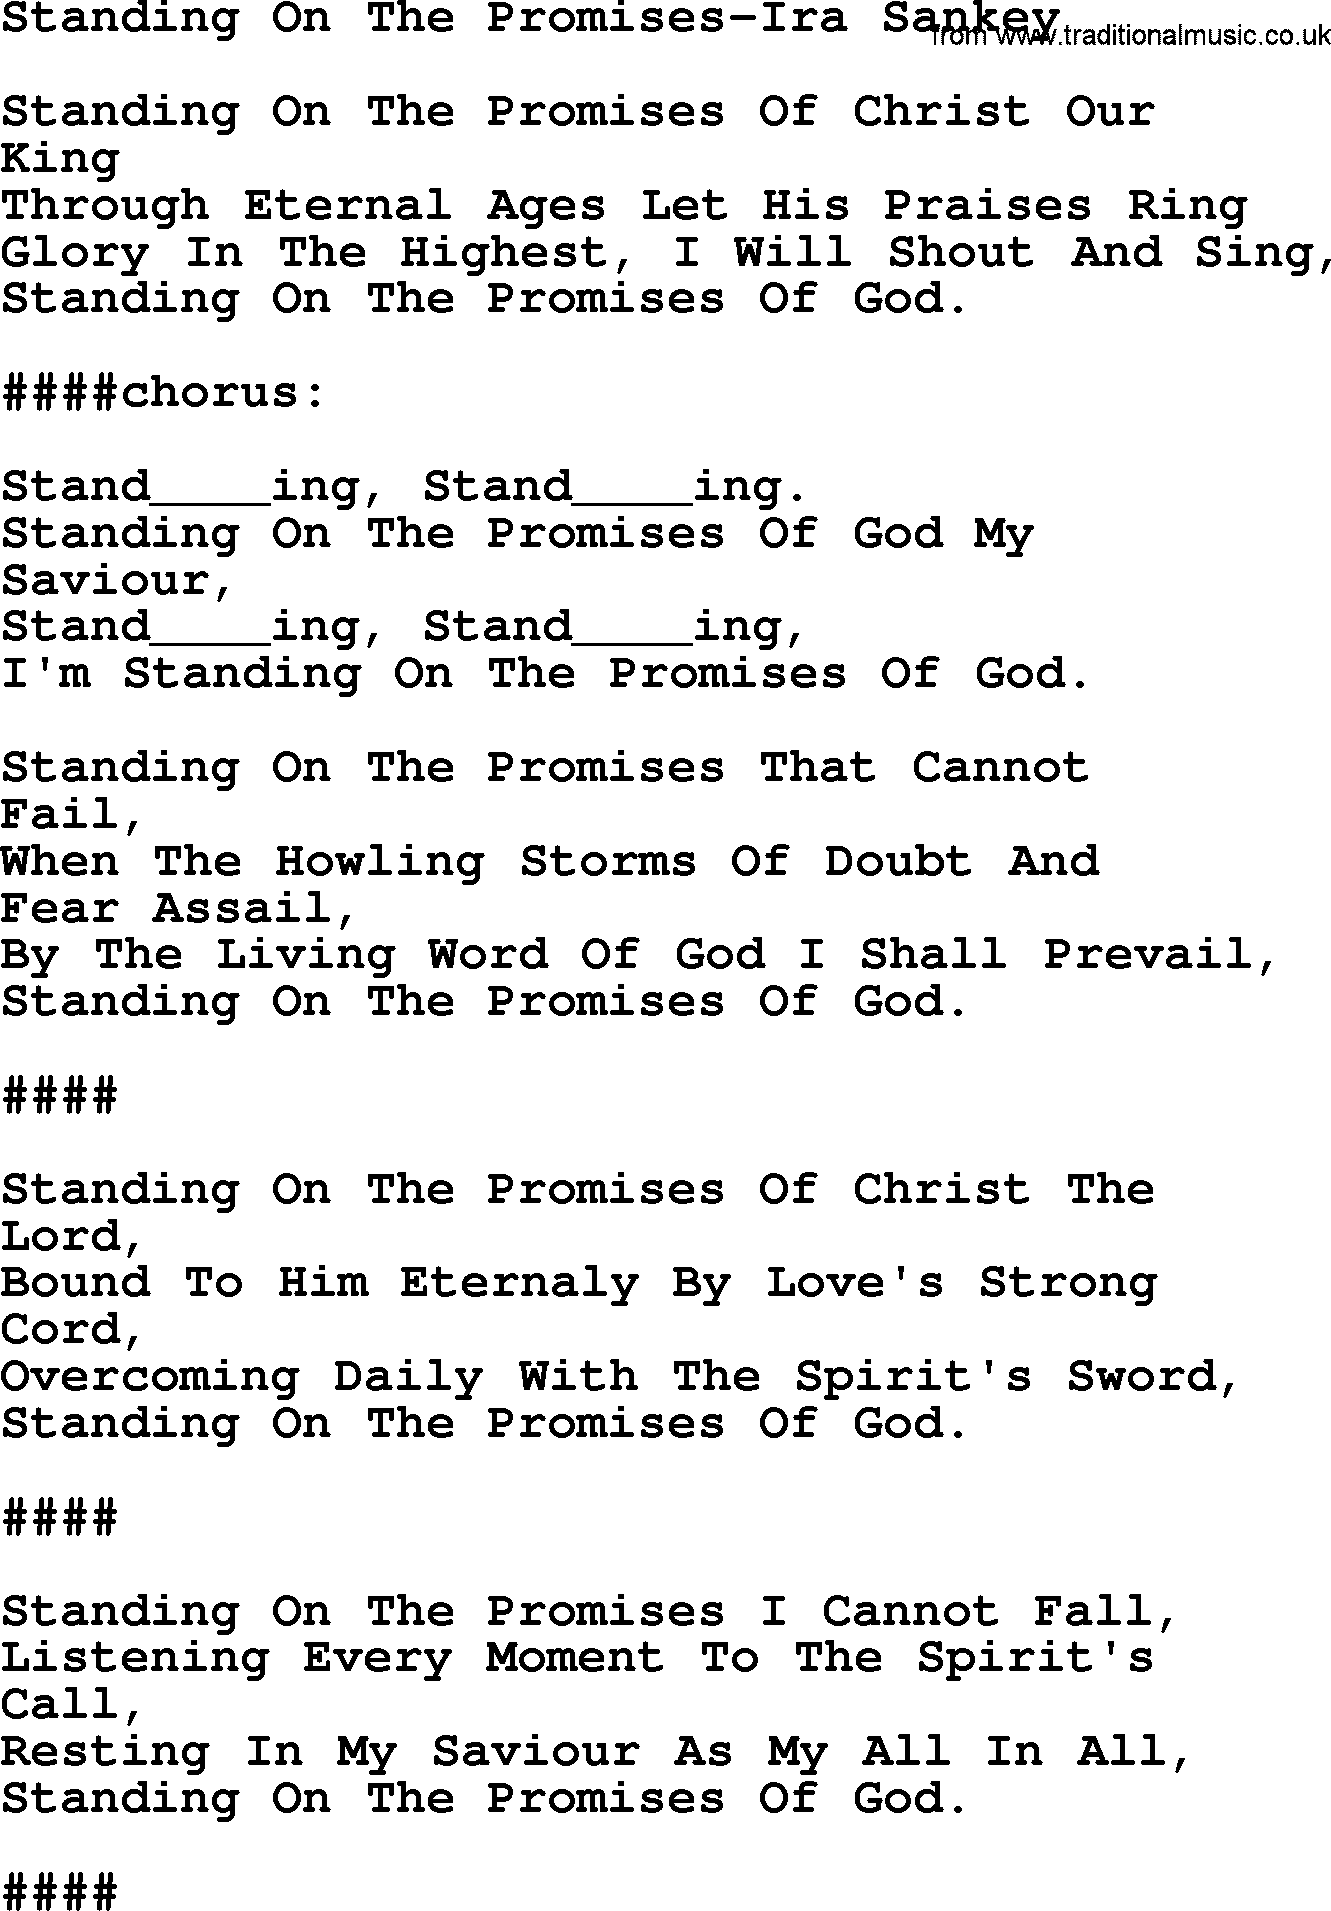 Ira Sankey hymn: Standing On The Promises-Ira Sankey, lyrics